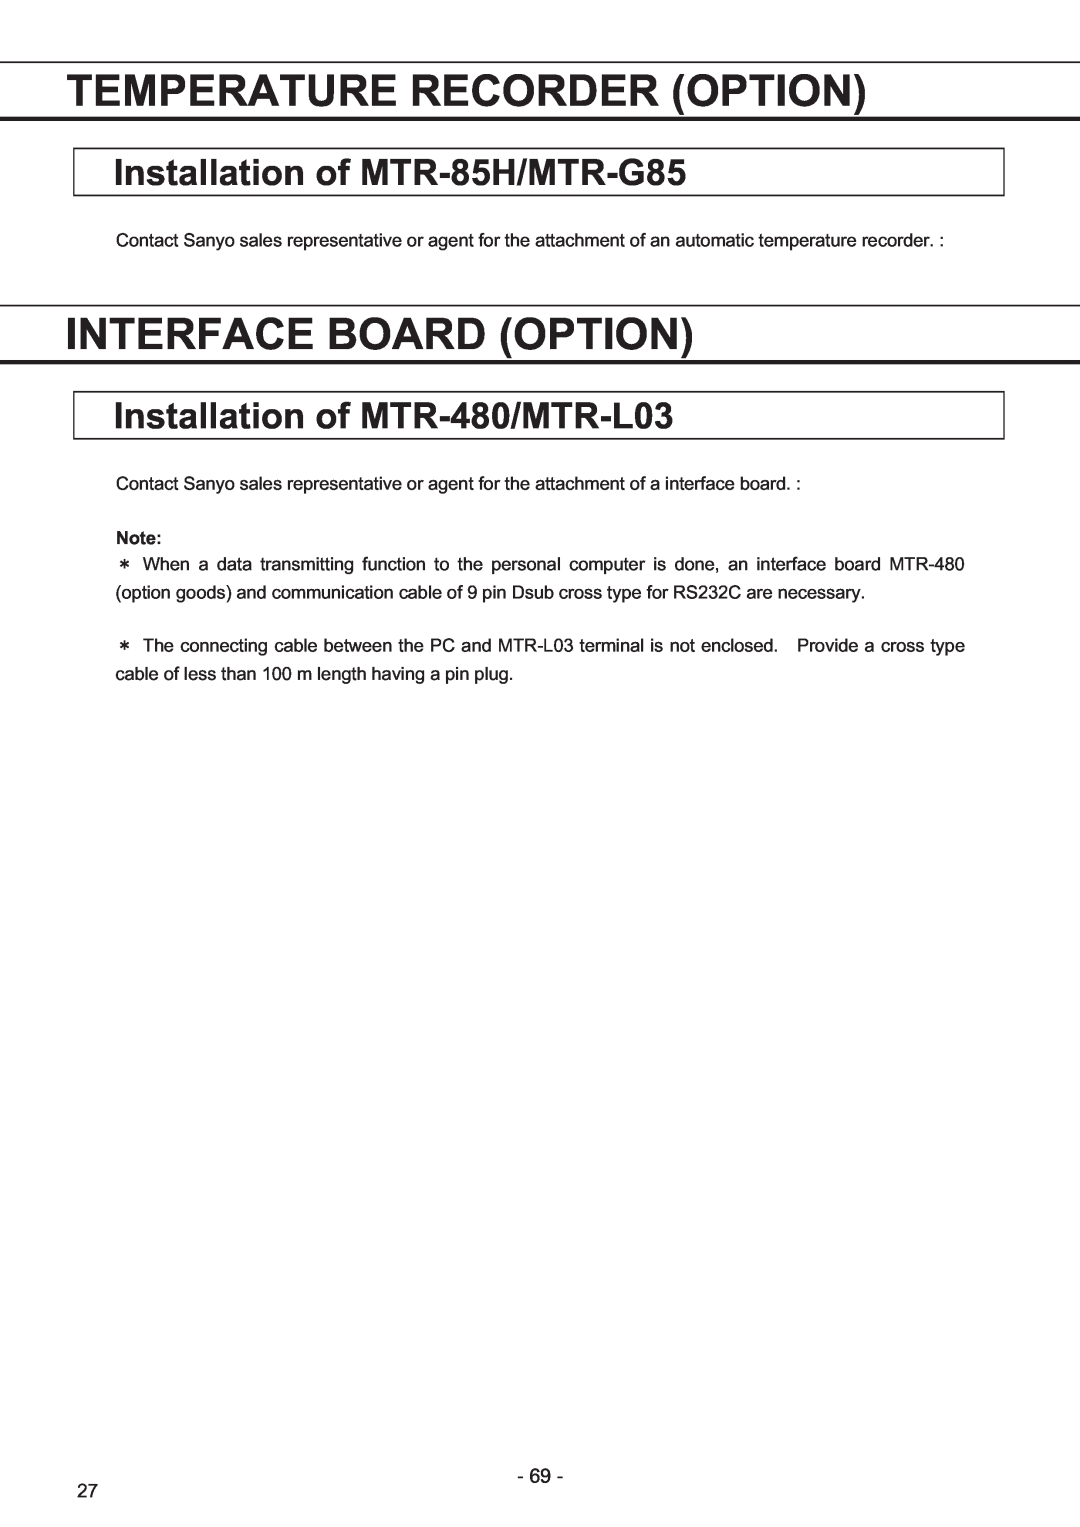 Sanyo MDF-U7486SC, MDF-U5486S Temperature Recorder Option, Interface Board Option, Installation of MTR-85H/MTR-G85 